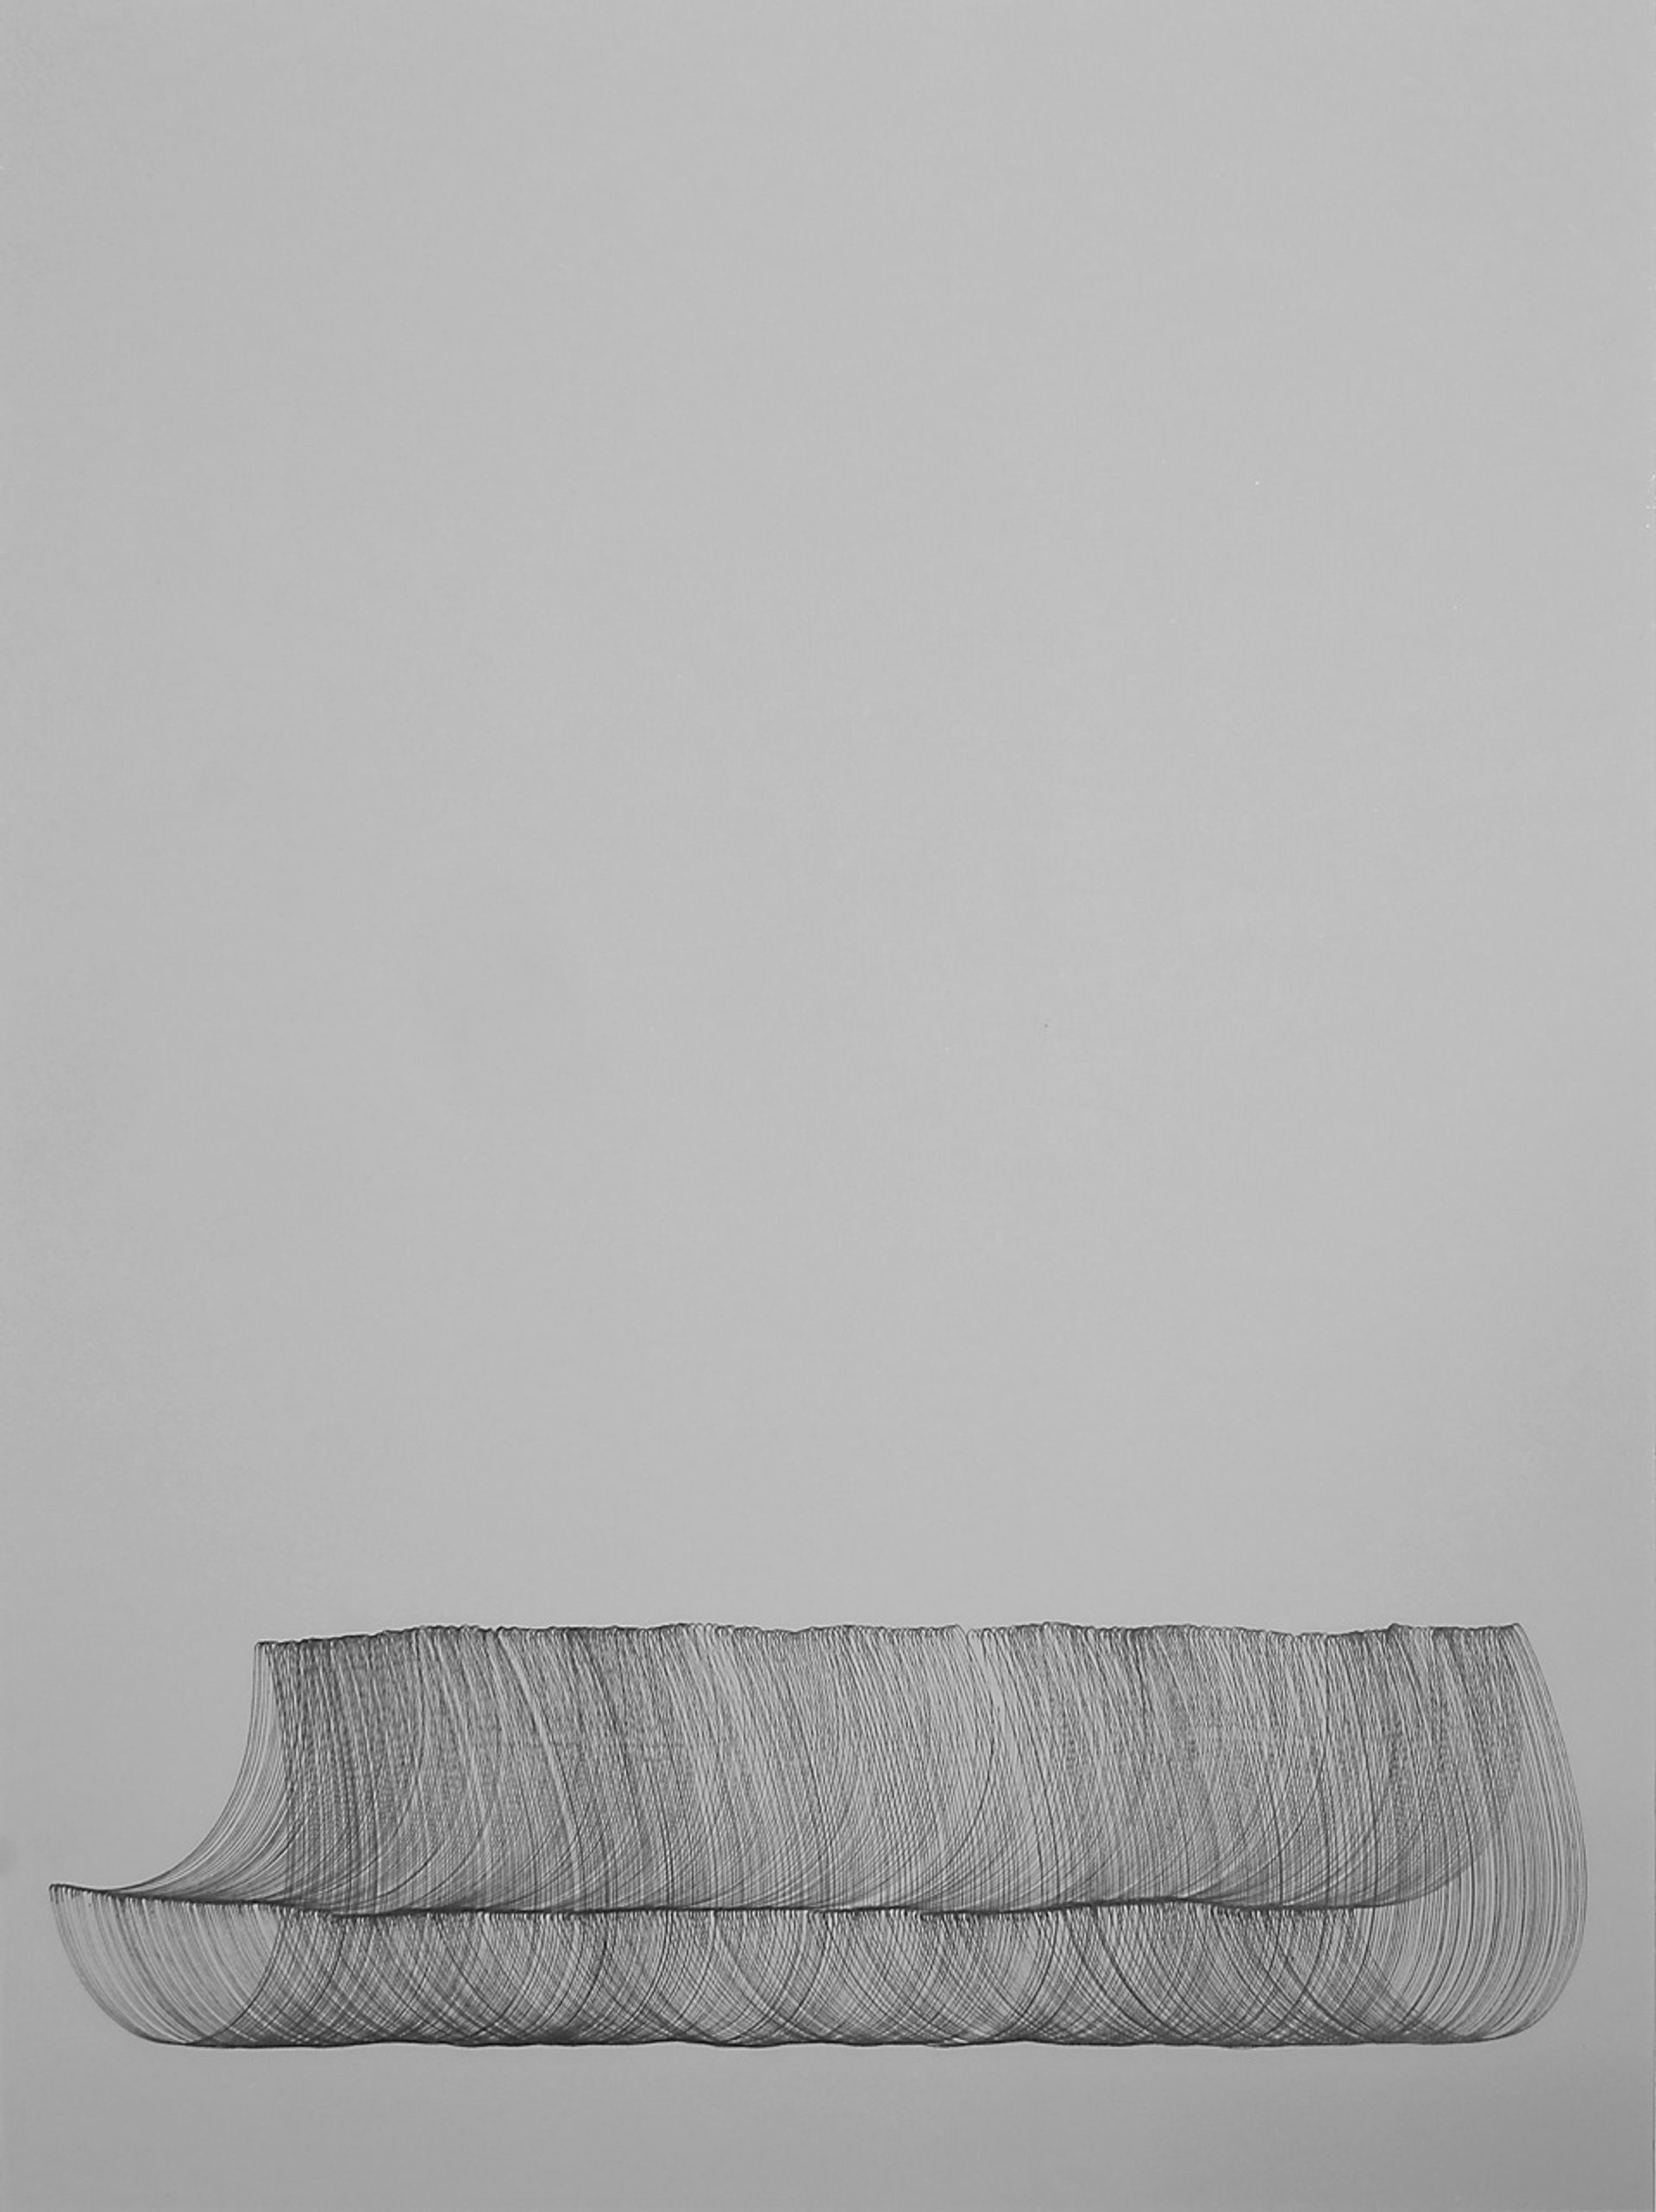 Anna Vogel, untitled, 2015, ink on pigment print, 30 × 40 cm